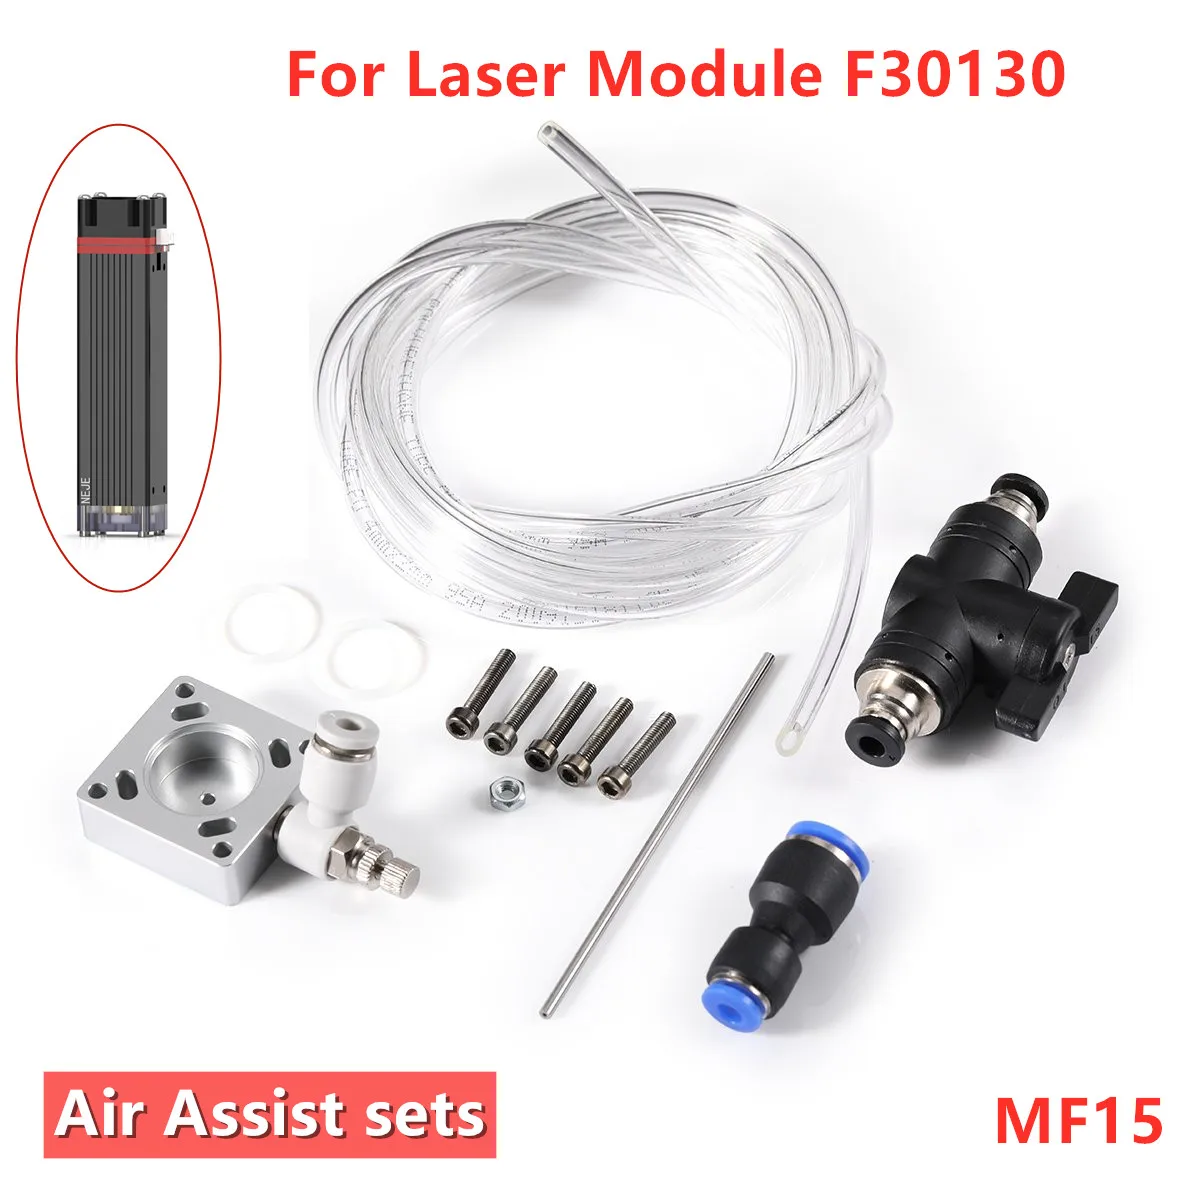 NEJE MF8 /MF11 /MF15  Manual Control Air Assist Kit for NEJE Laser Modules